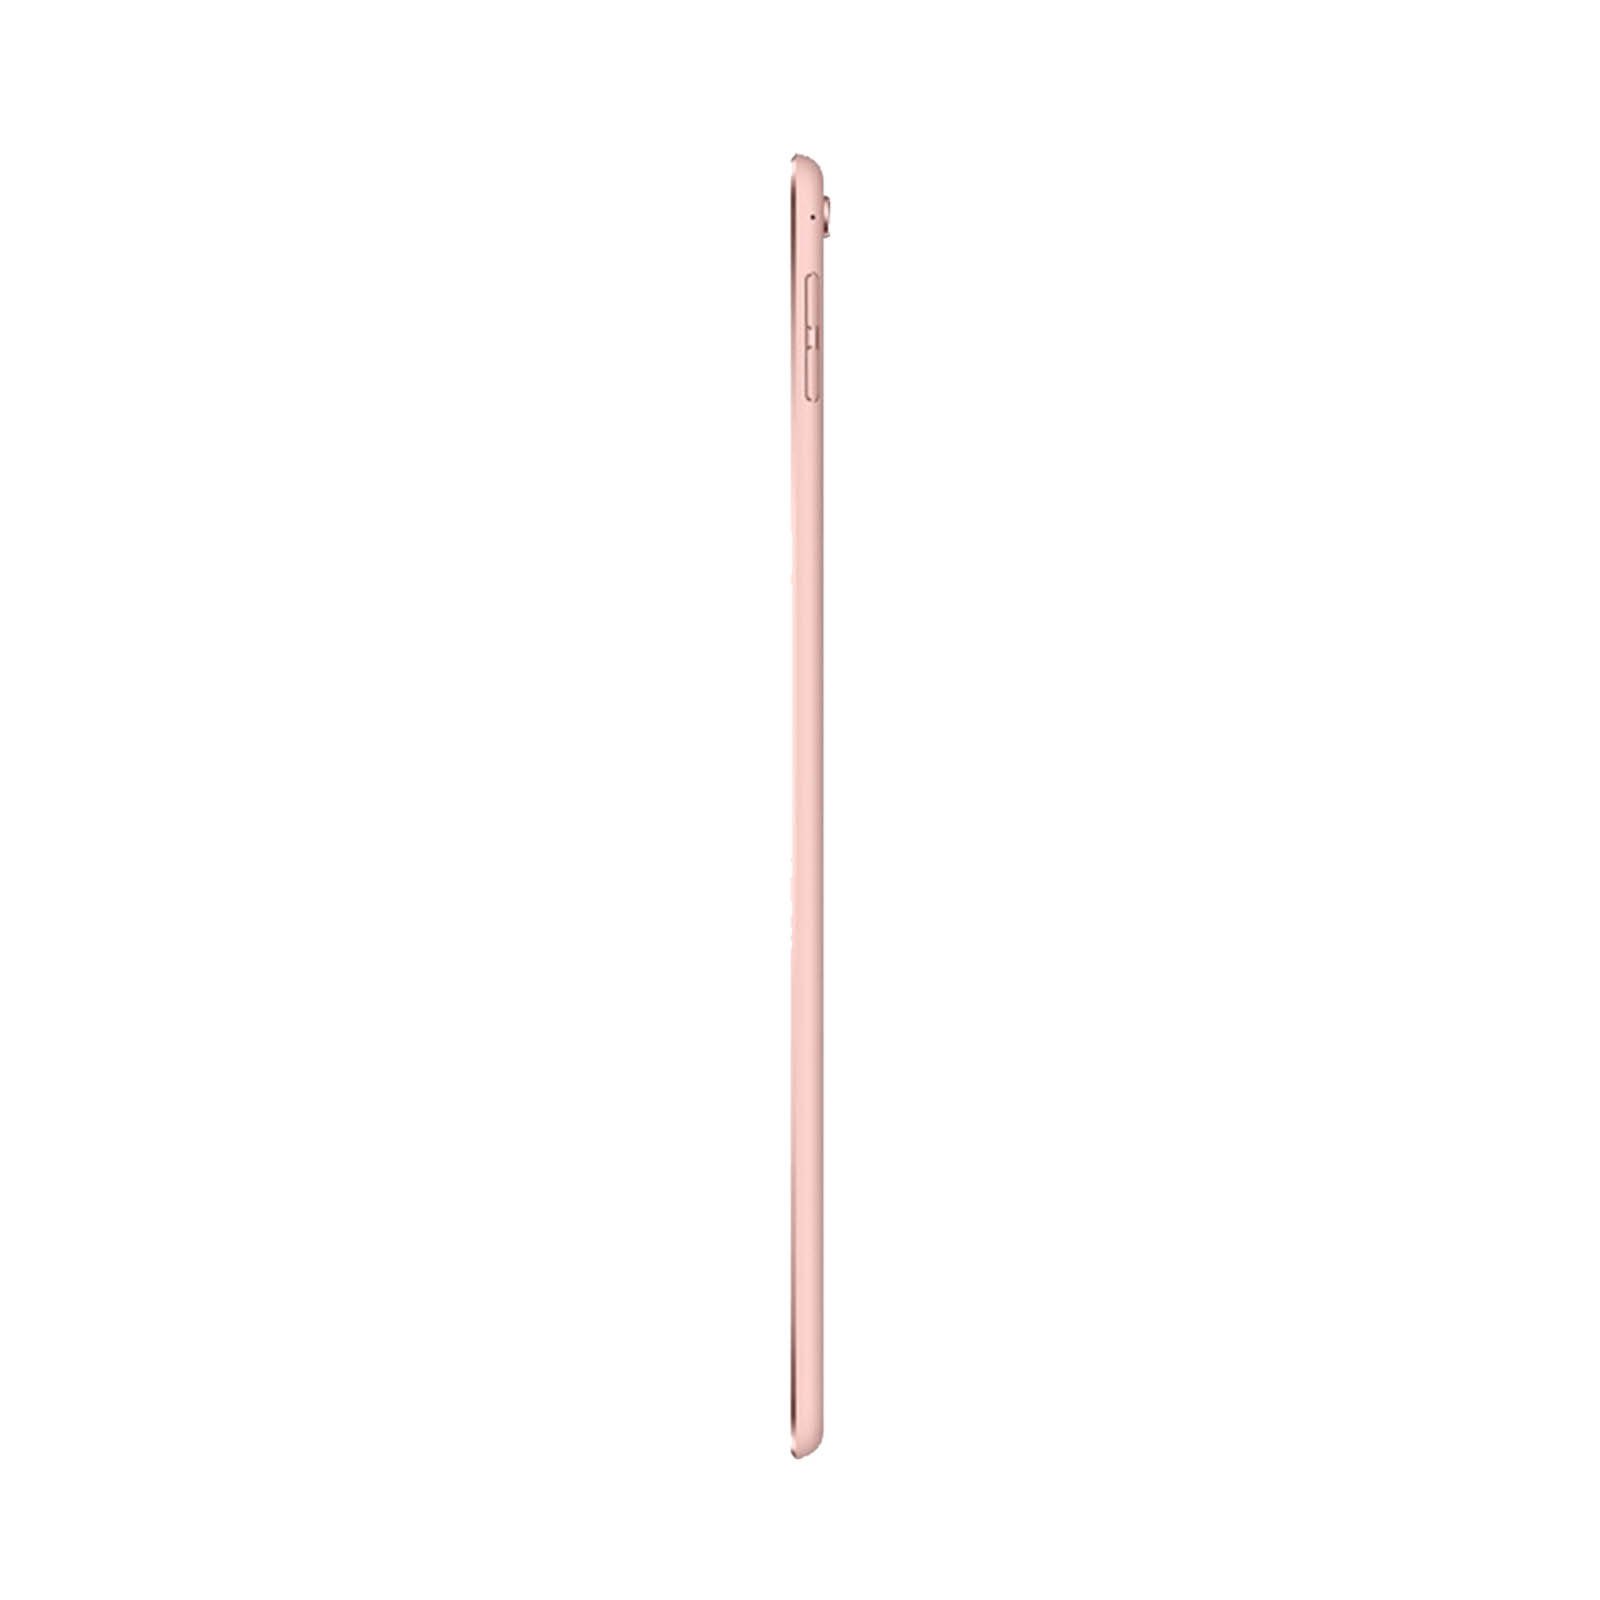 iPad Pro 9.7 Inch 256GB Rose Gold Pristine - WiFi